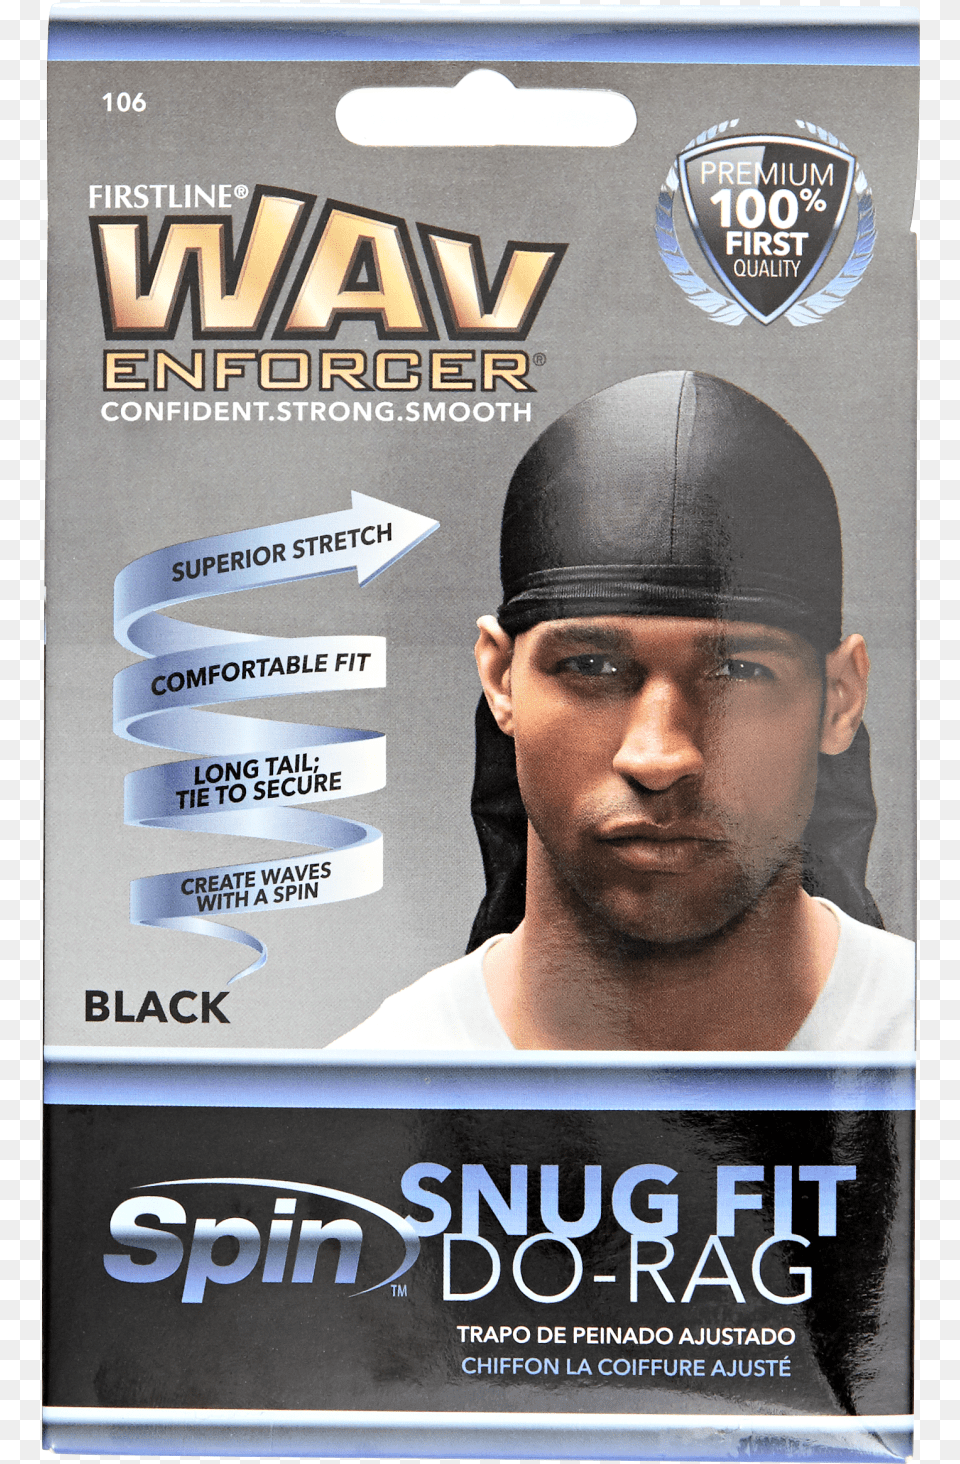 Firstline Evolve Wave Enforcer Classic Doo Rag, Hat, Baseball Cap, Cap, Clothing Png Image